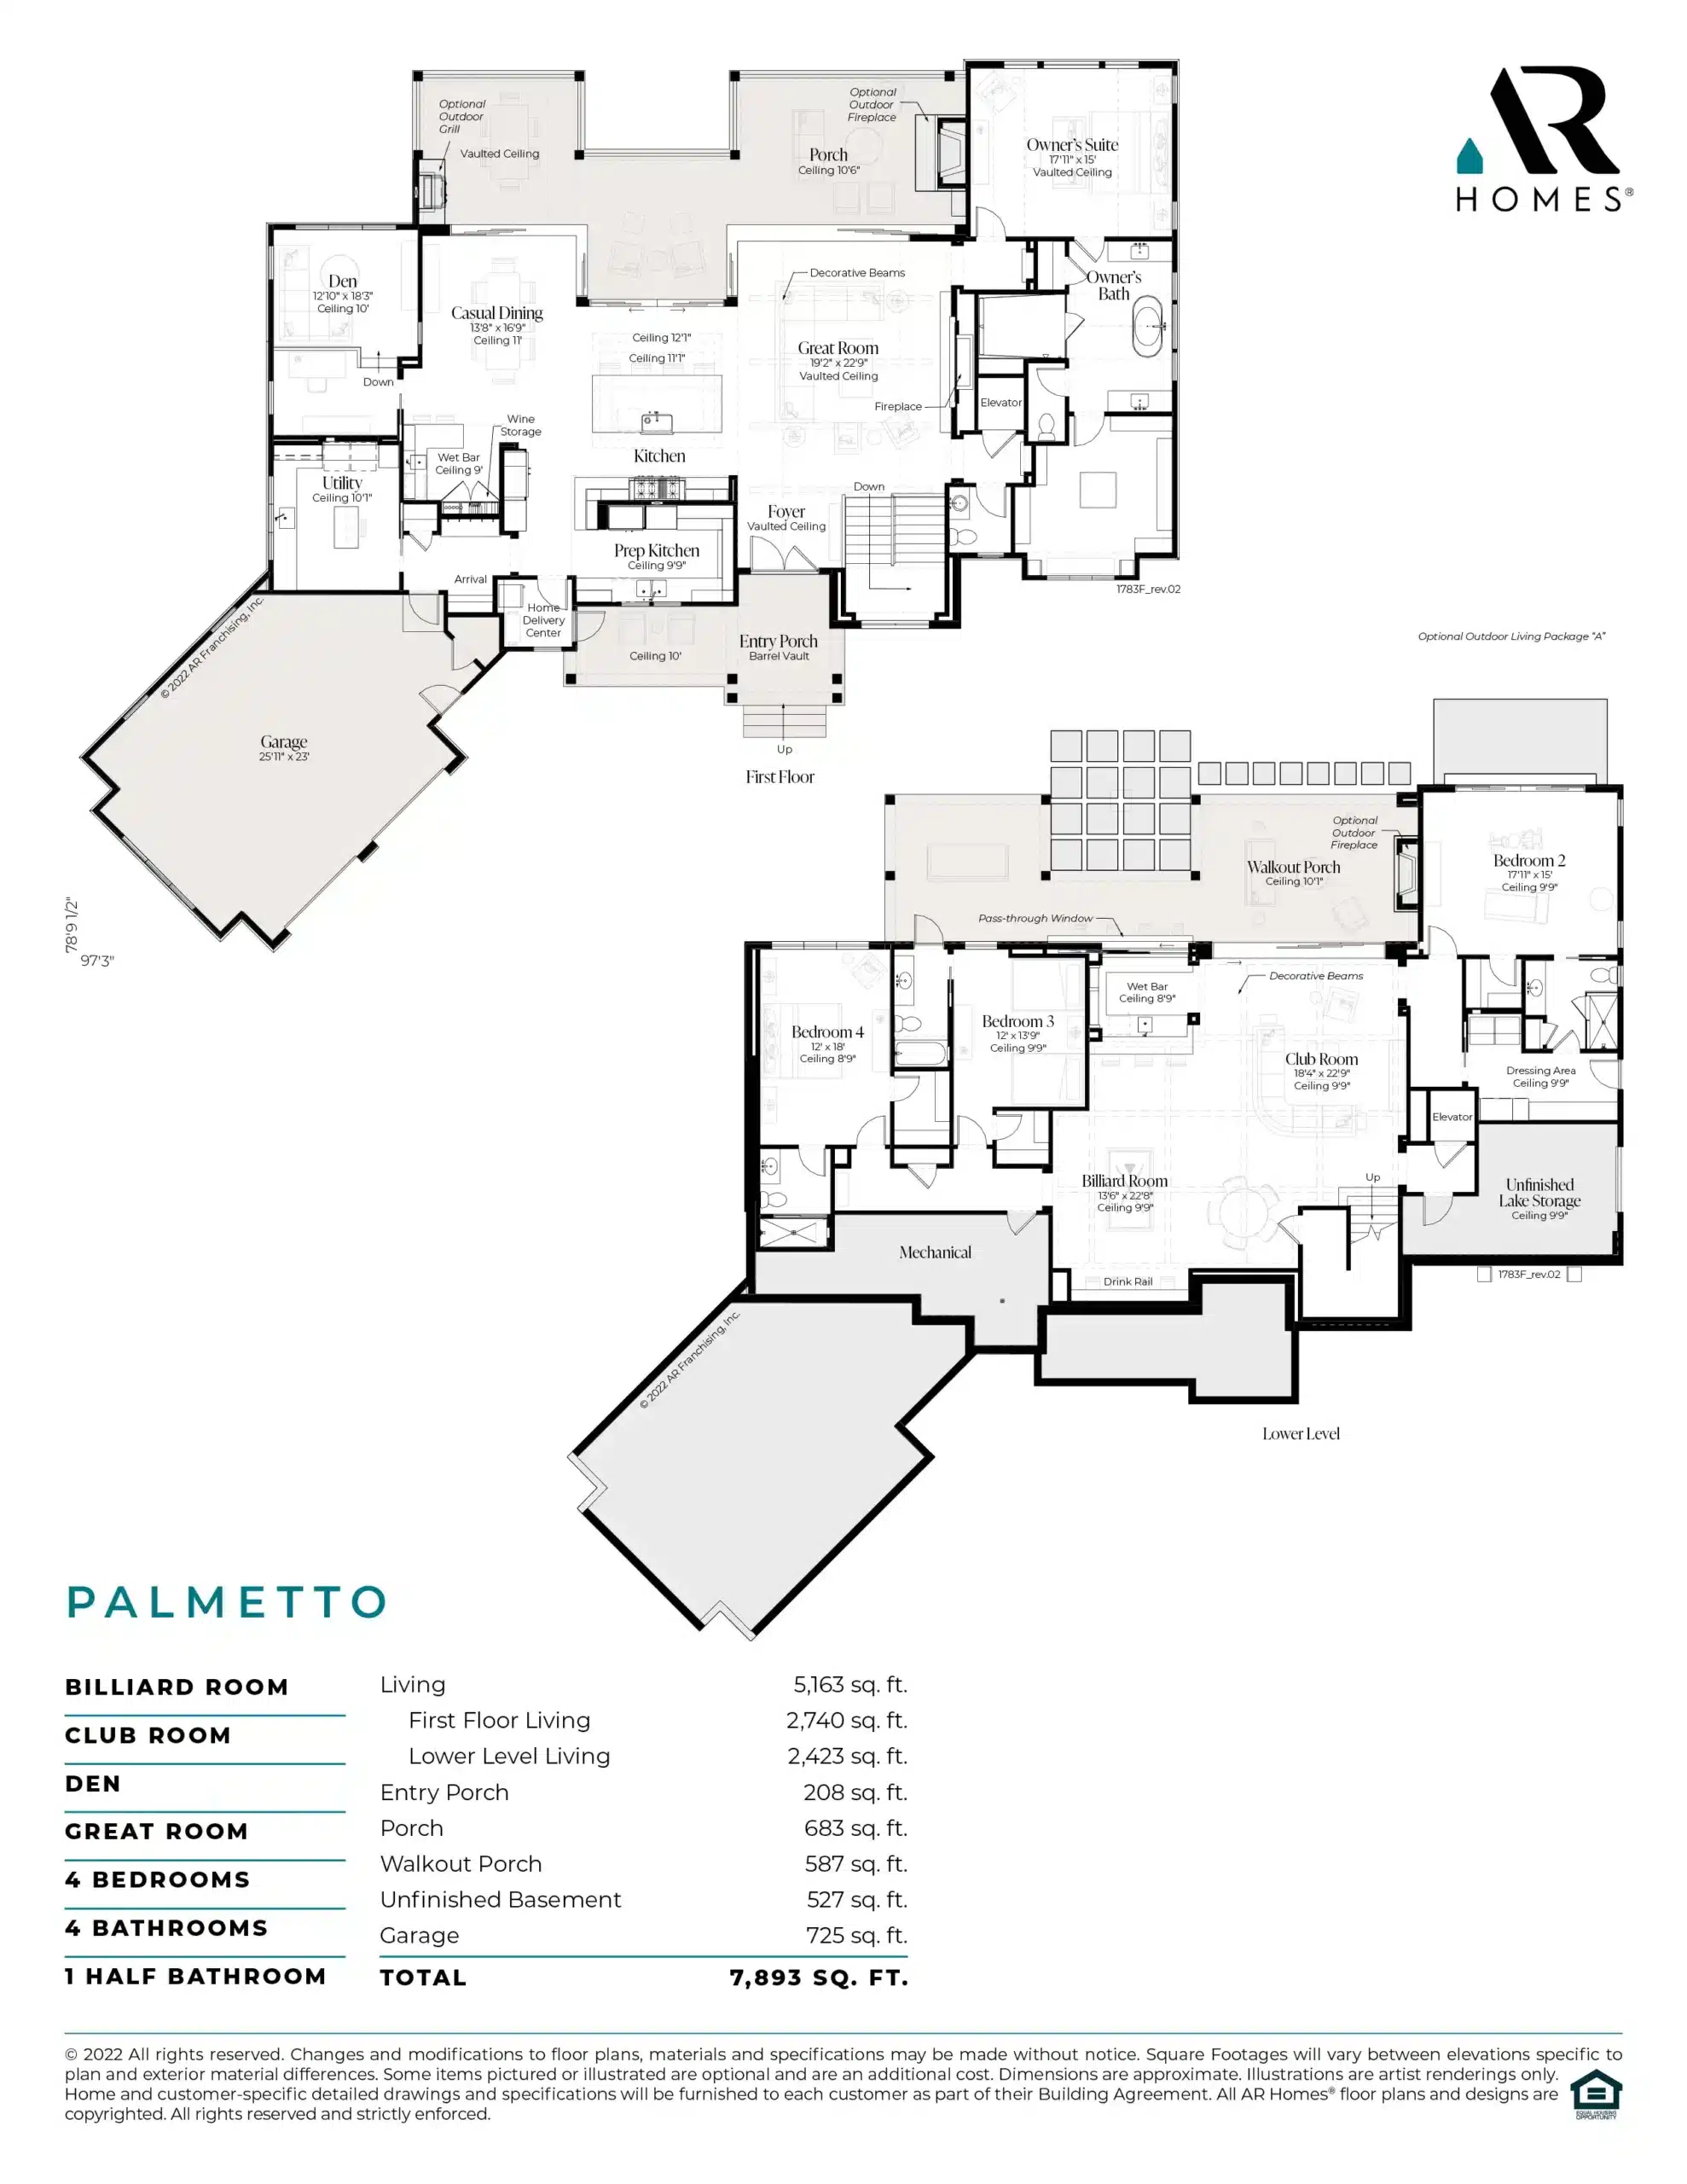 The Palmetto Plan Ar Homes By Arthur Rutenberg